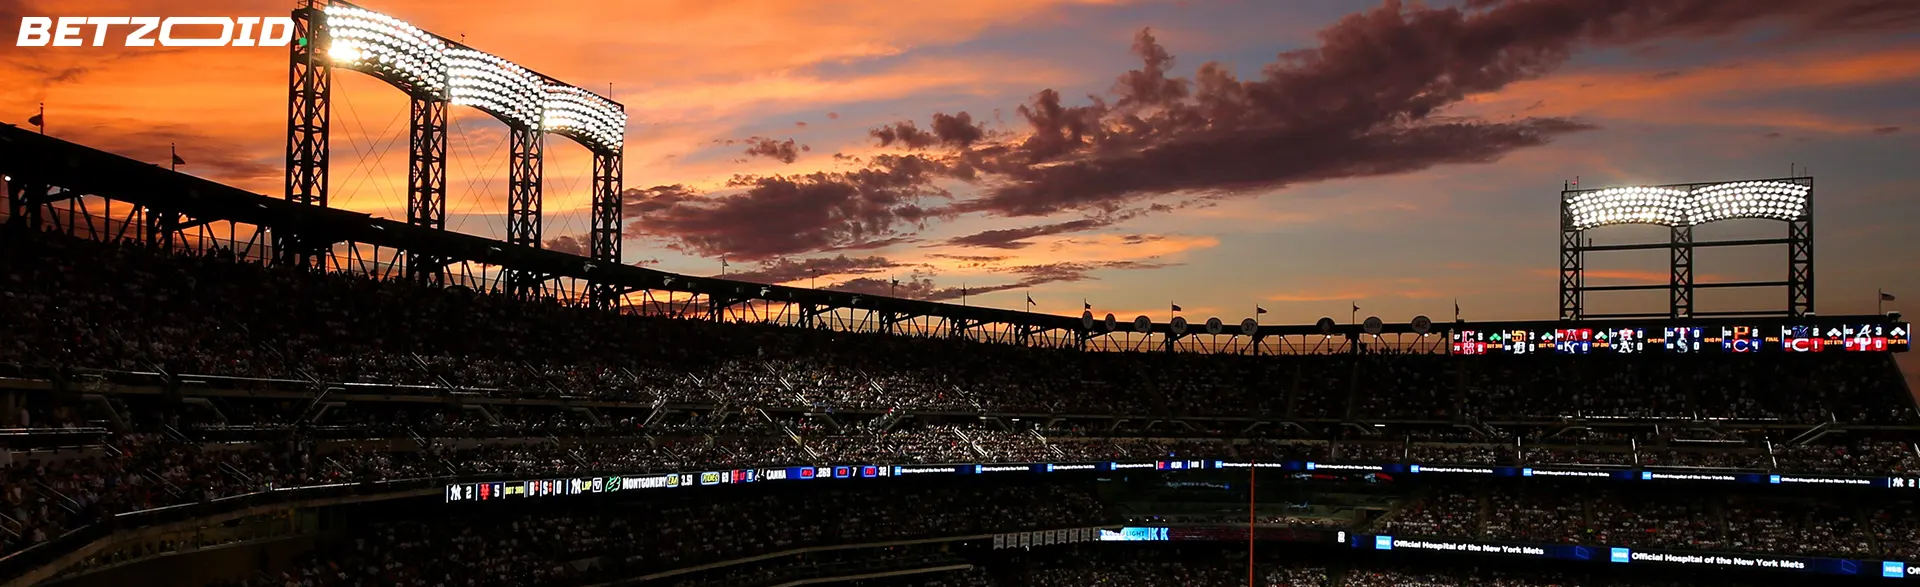 A sunset view of a crowded baseball stadium, representing Nova Scotia sportsbooks.